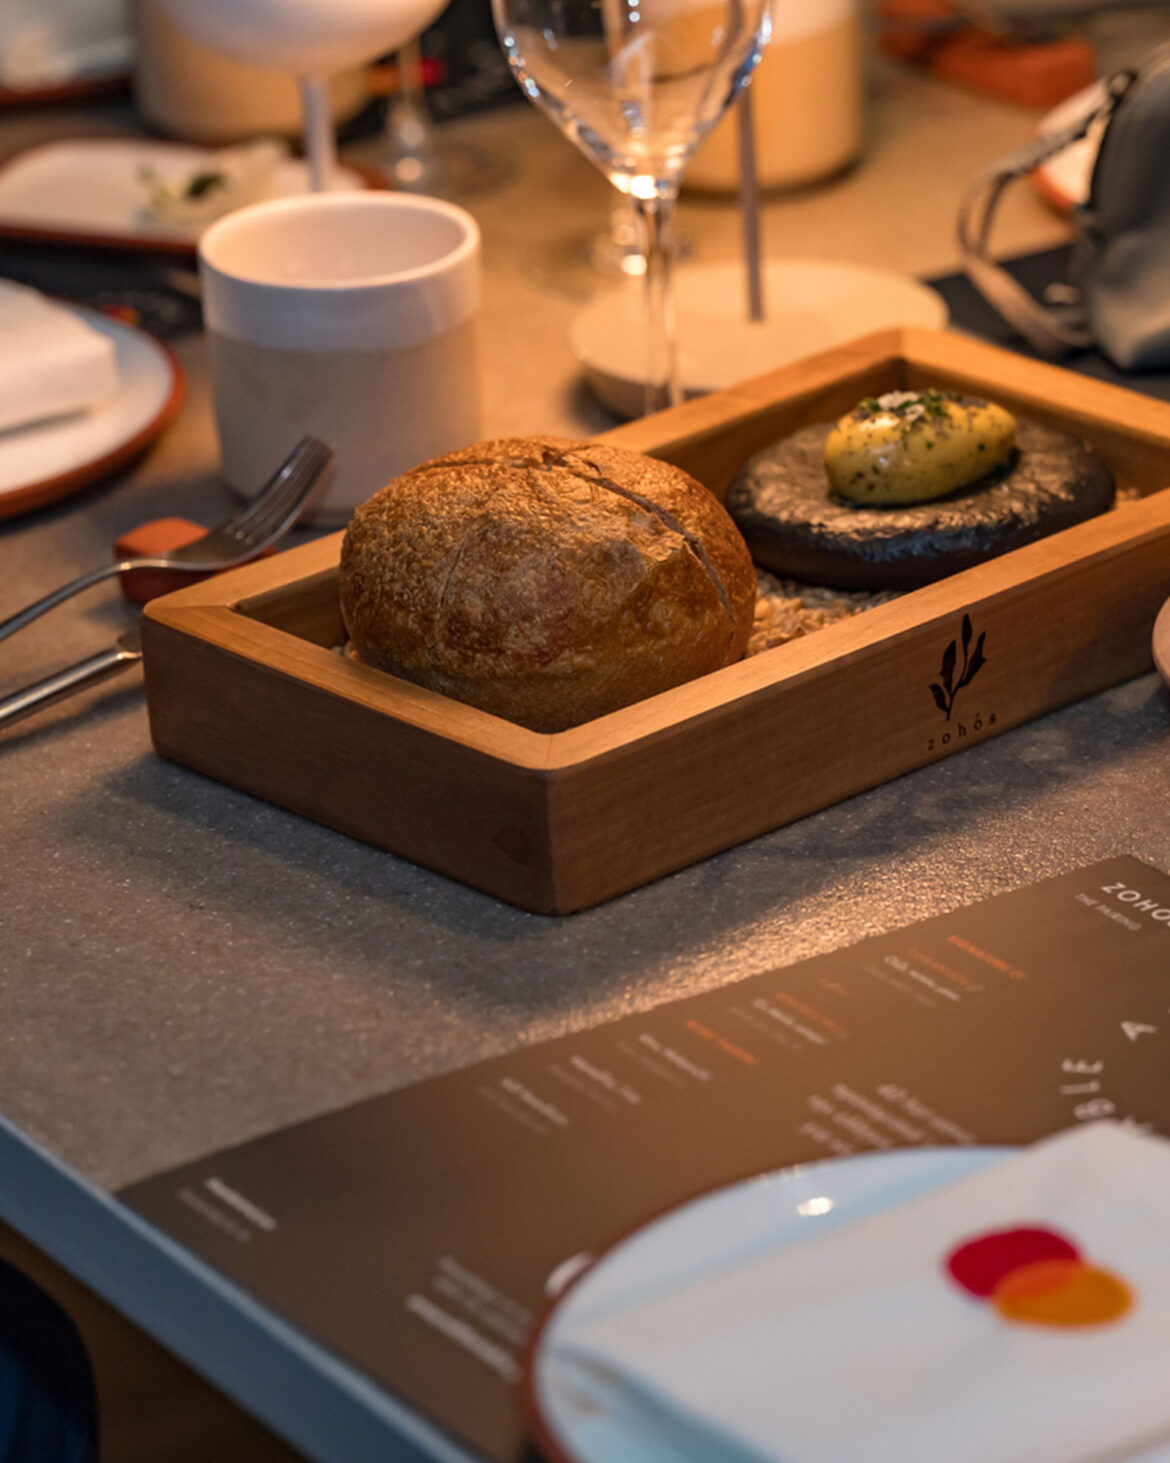 Mastercard: Η απόλυτη foodie εμπειρία του Around the table επιστρέφει!